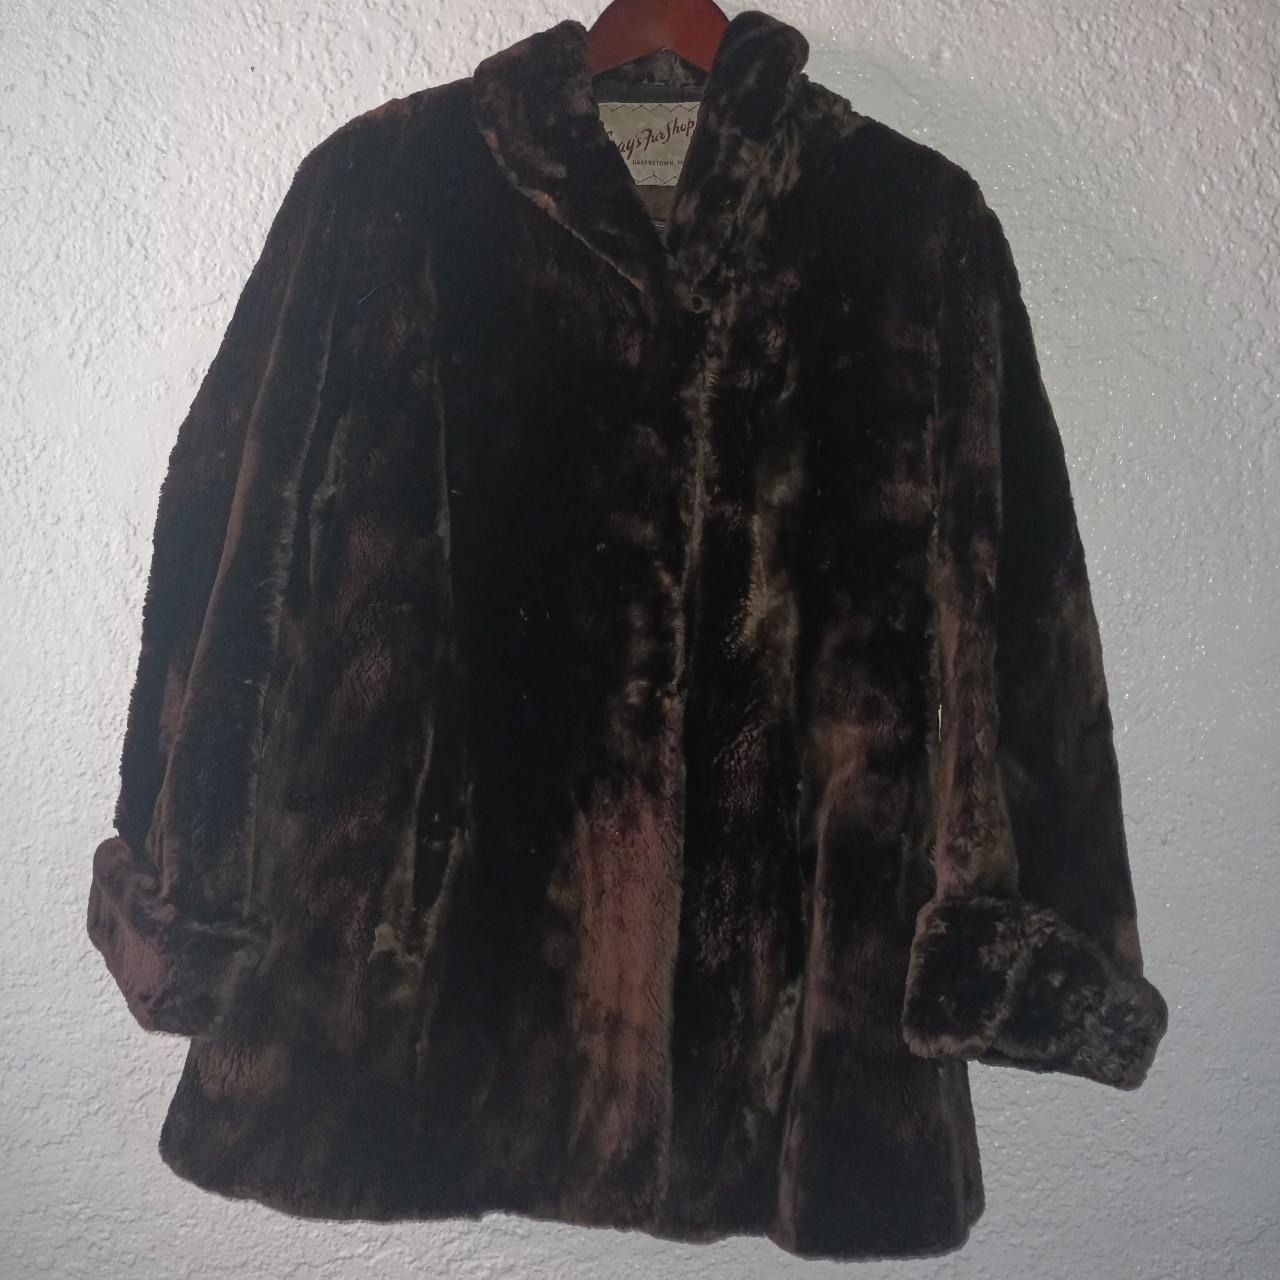 Vintage 1950s Grays Fur Coat from Hagerstown MD,... - Depop